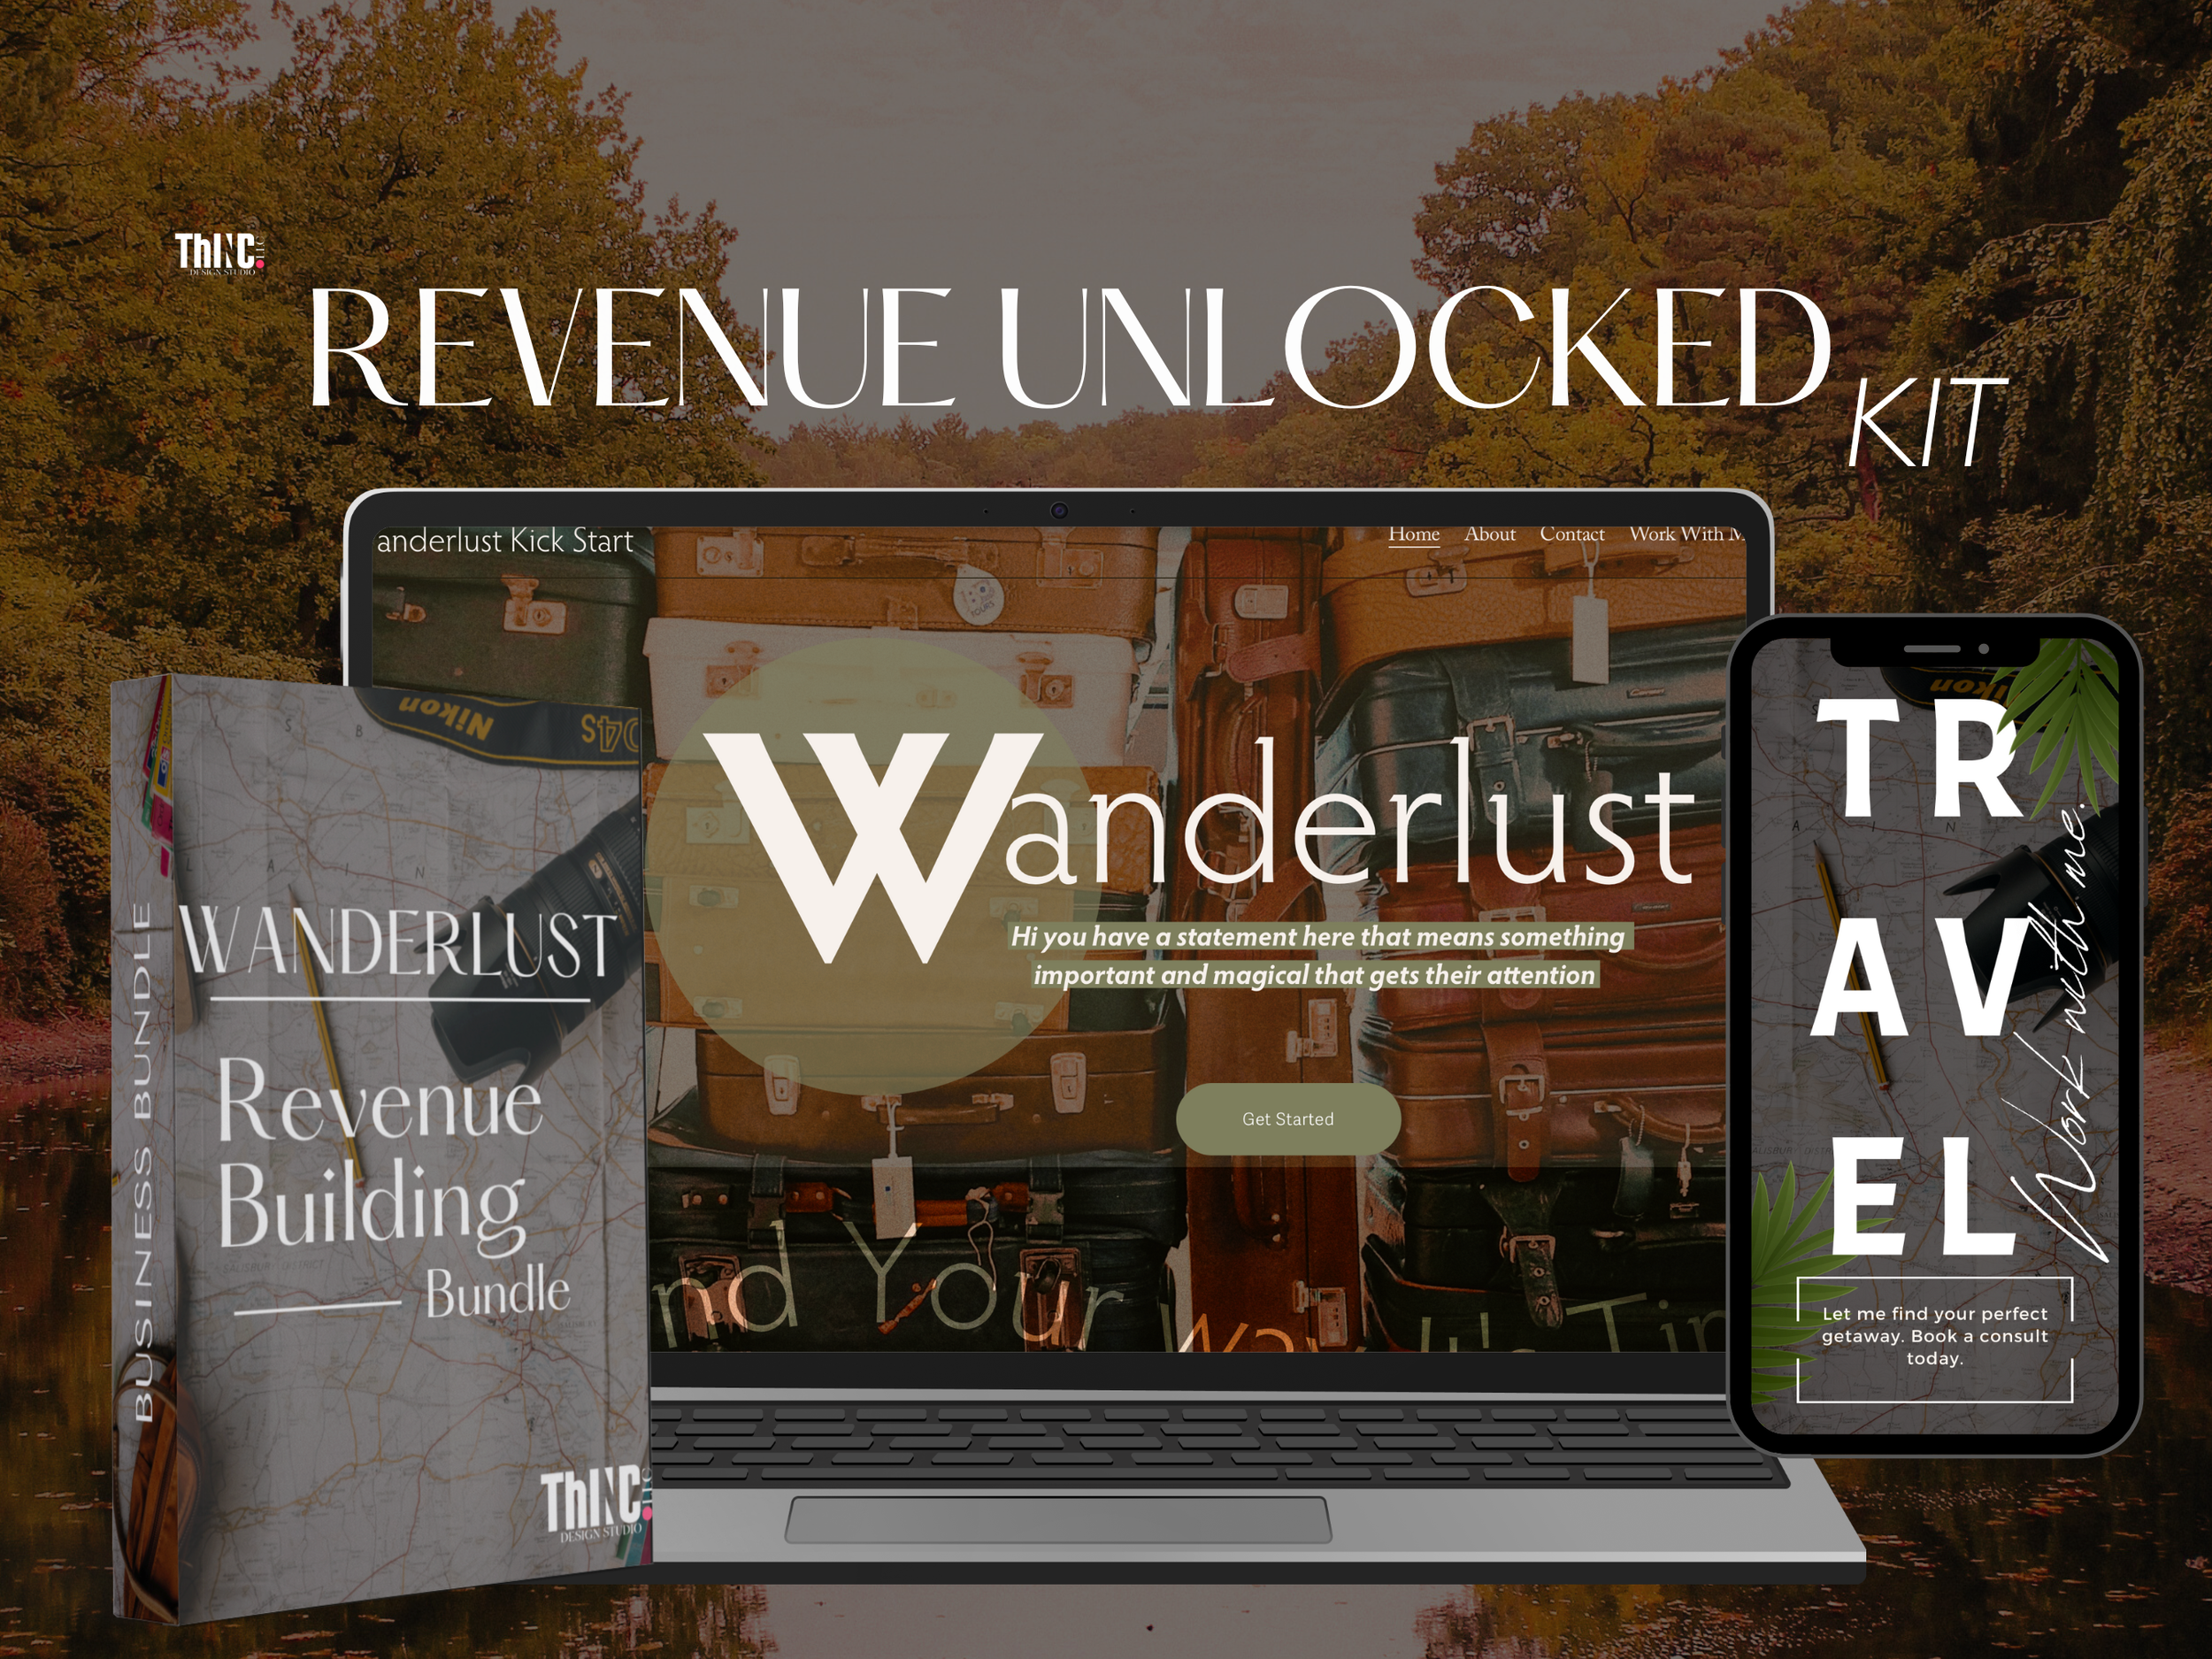 Wanderlust 2marketing kit.png